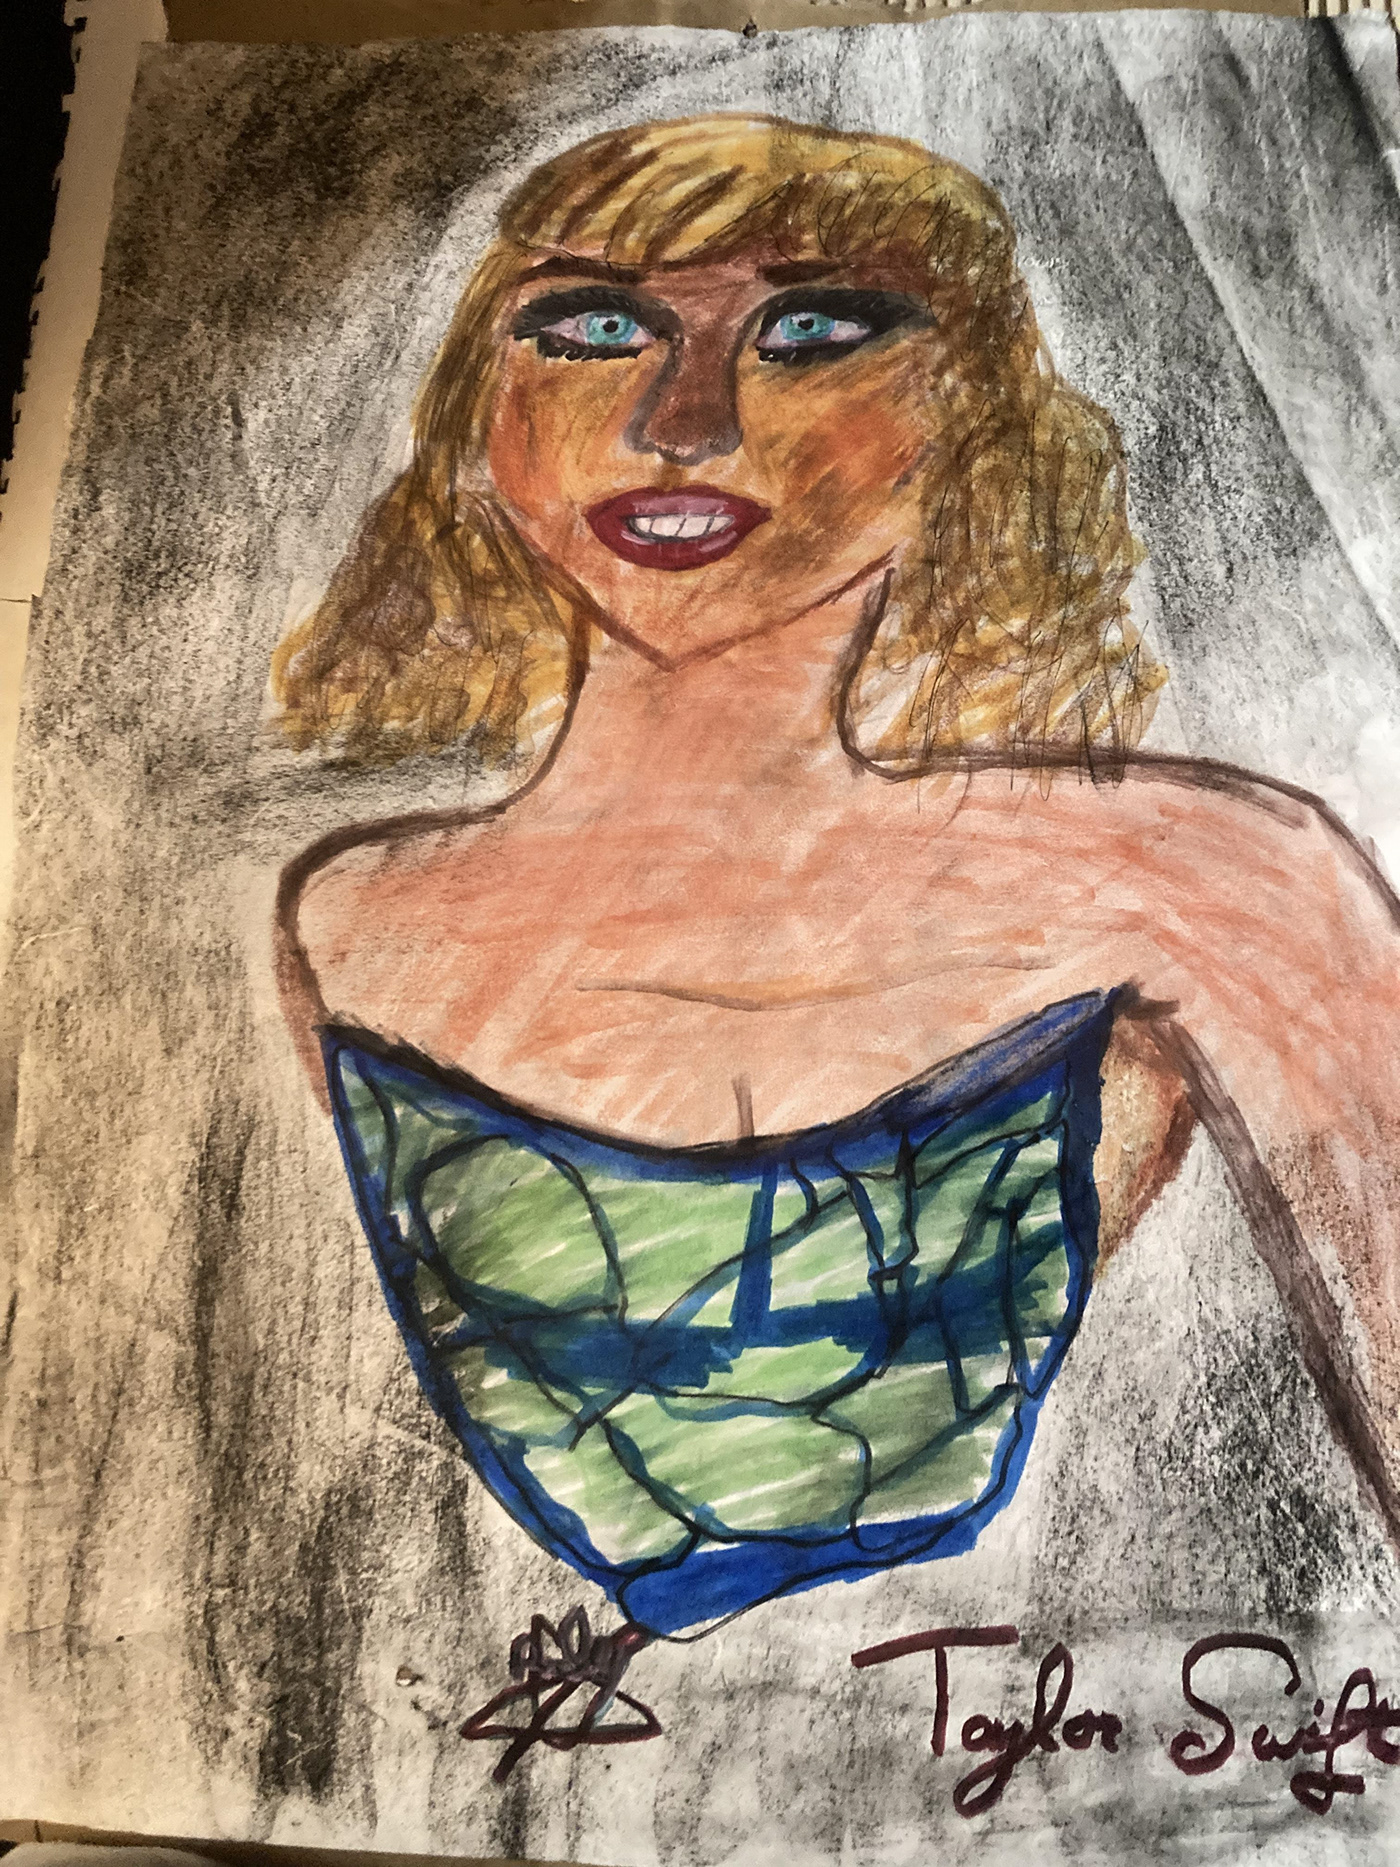 Taylor Swift drawing